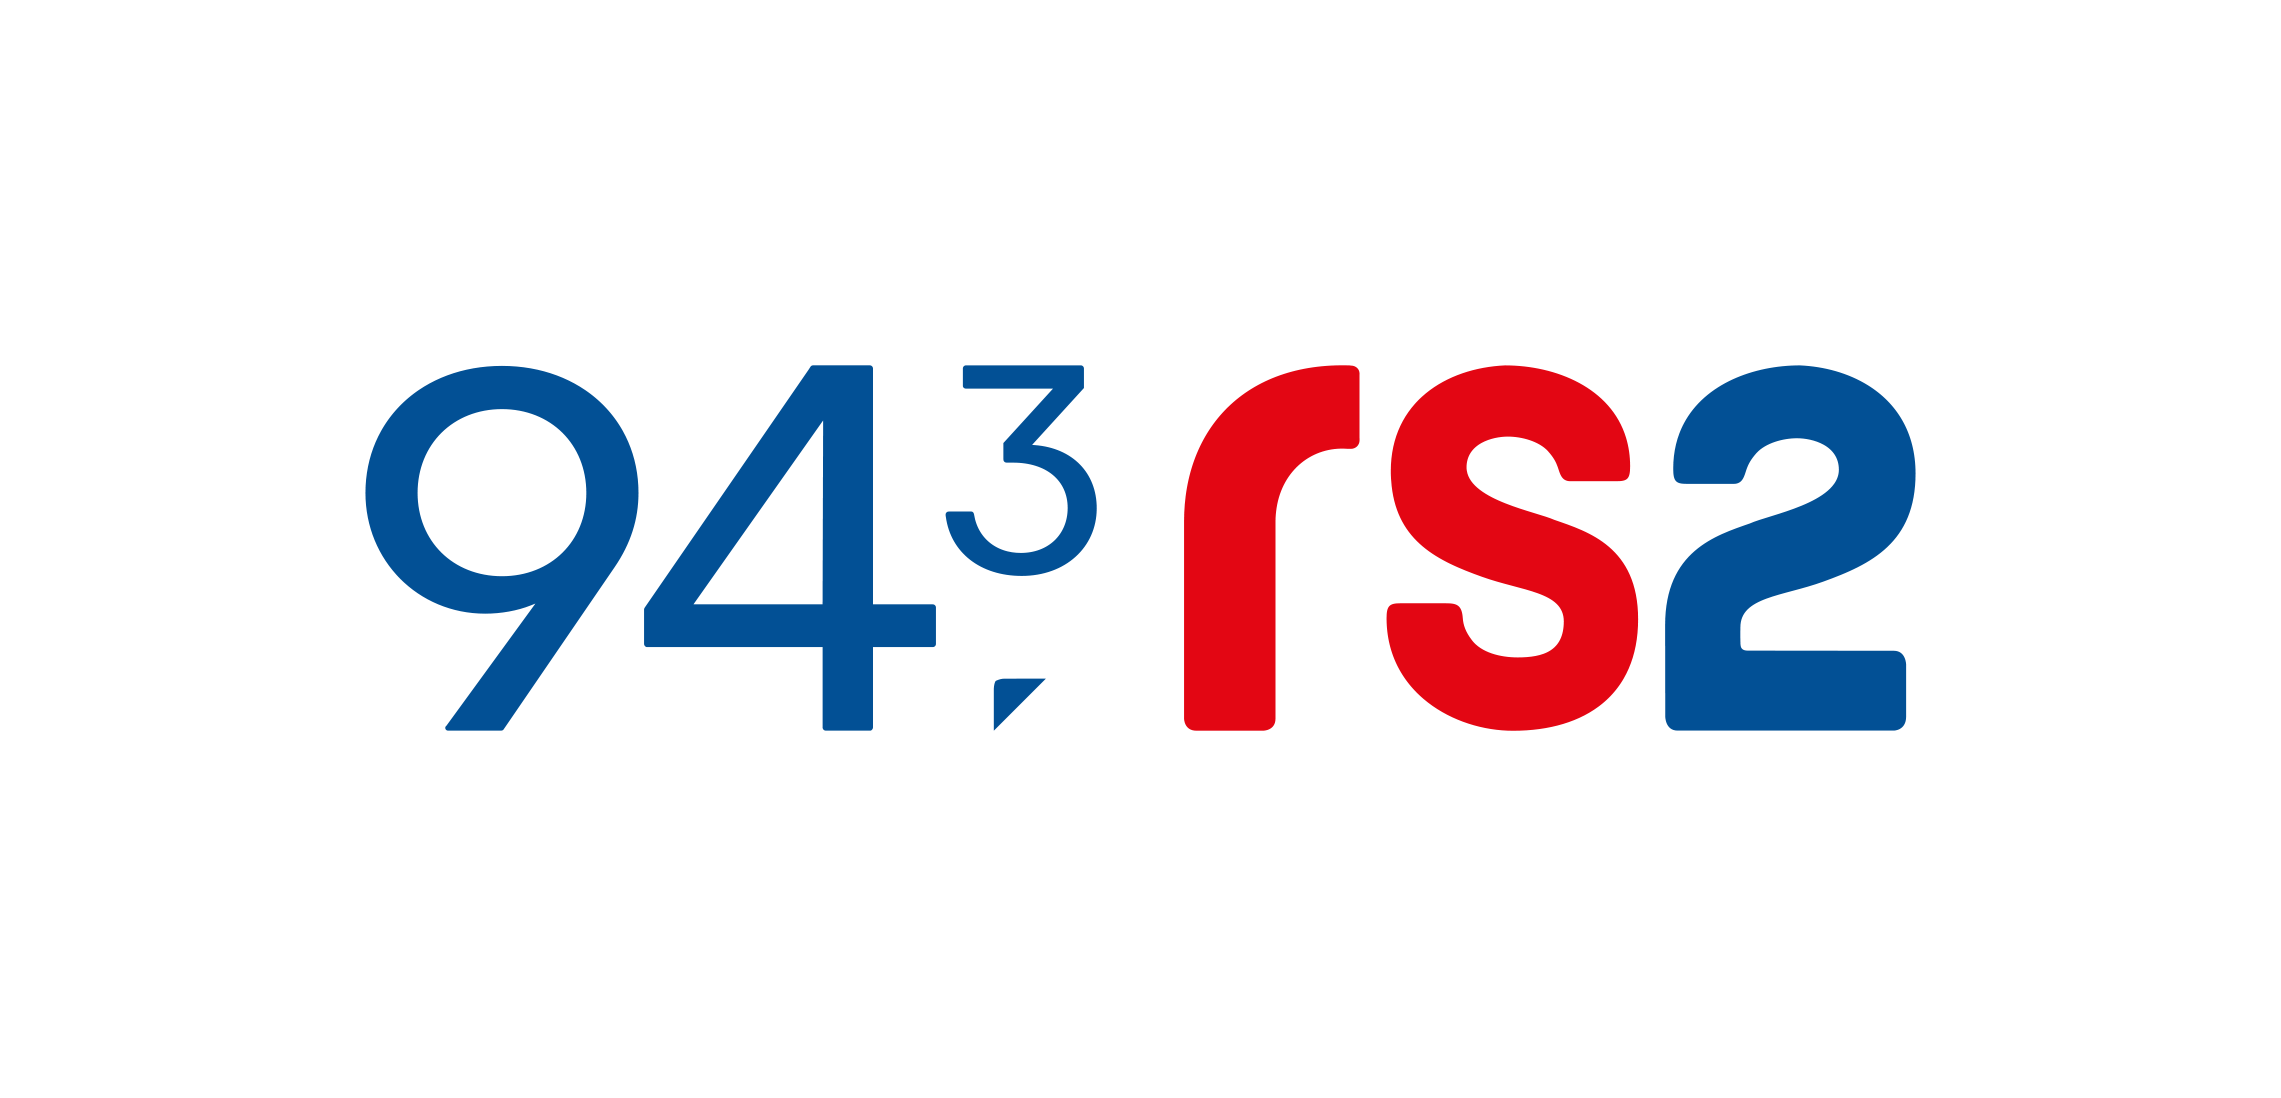 Logo 94,3 rs2